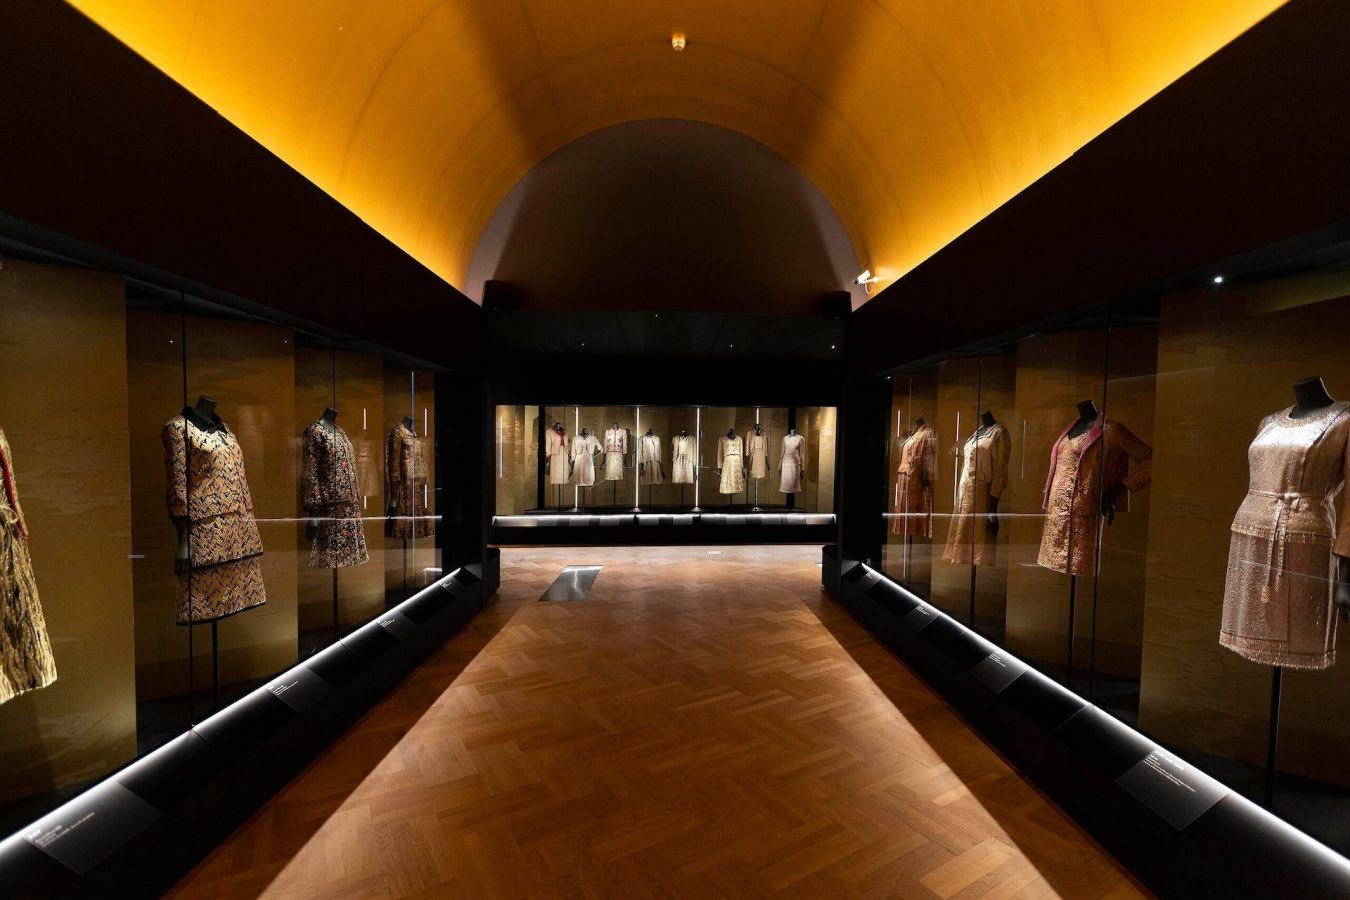 Chanel Major V&A London Exhibit About Designer's Life